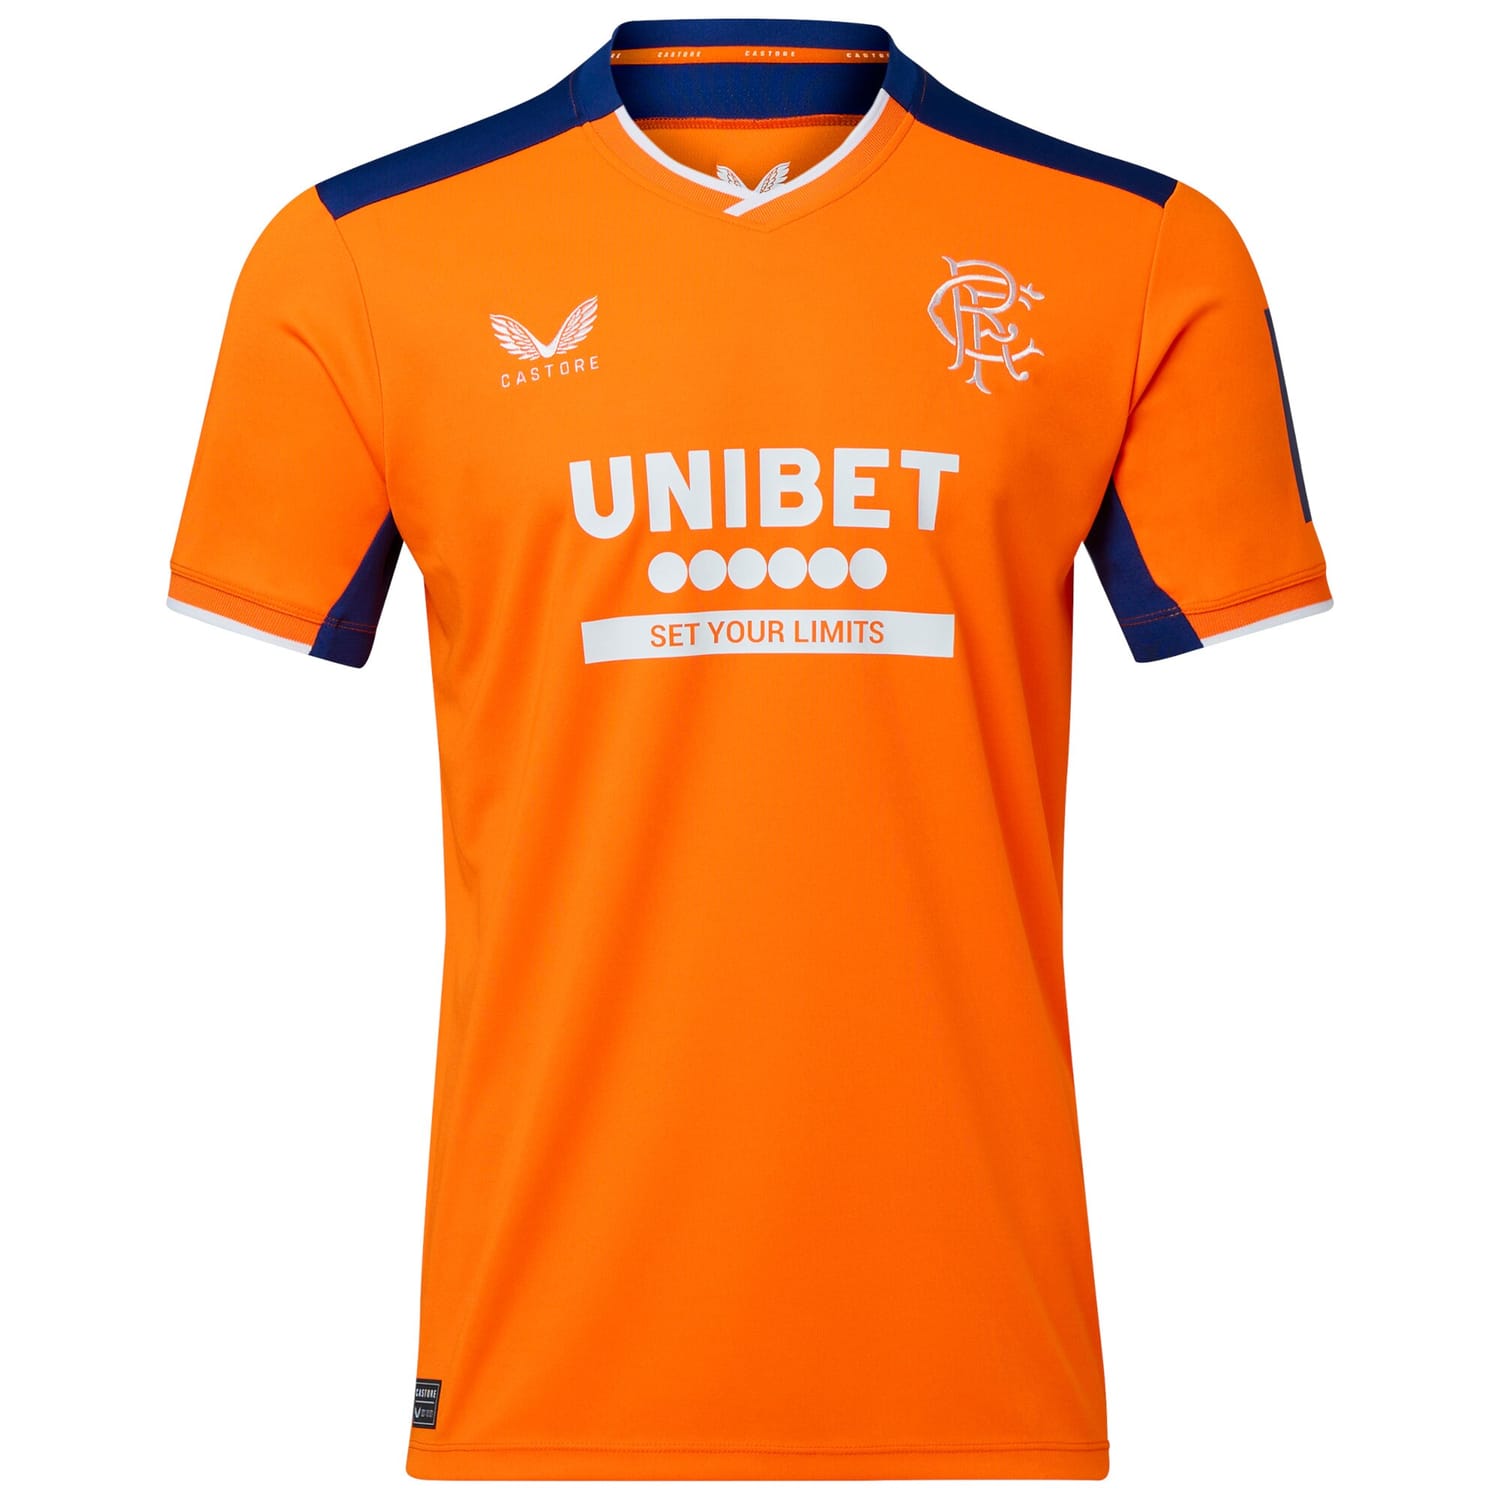 Scottish Premiership Rangers FC Third Jersey Shirt 2022-23 player Ianis Hagi 7 printing for Men